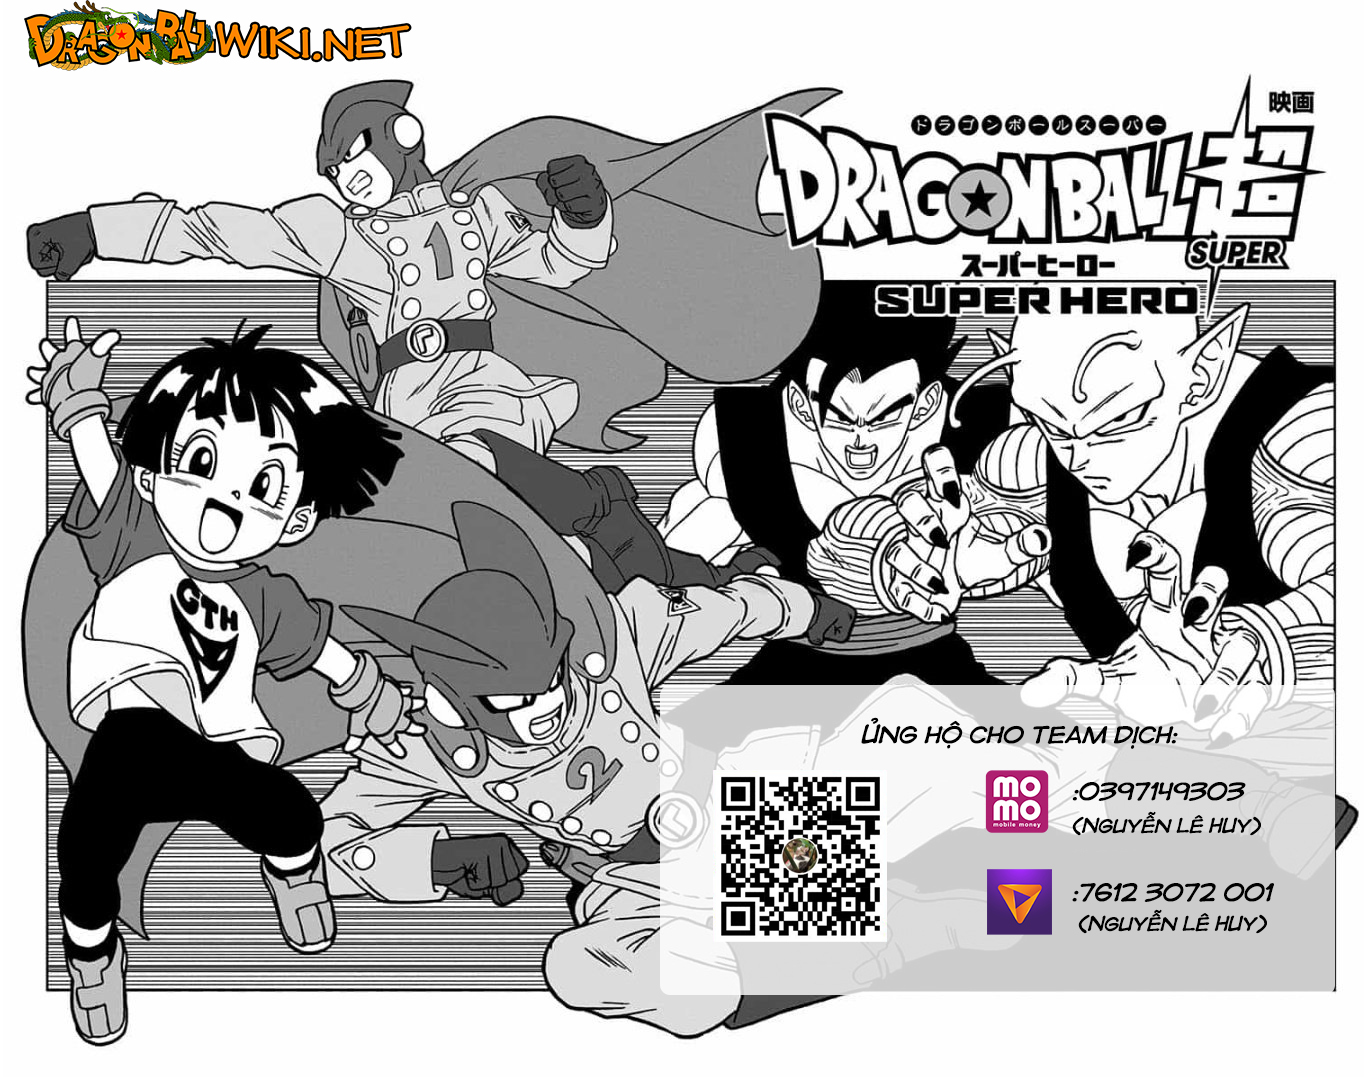 Trang 2 - Dragon Ball Super Chap 98